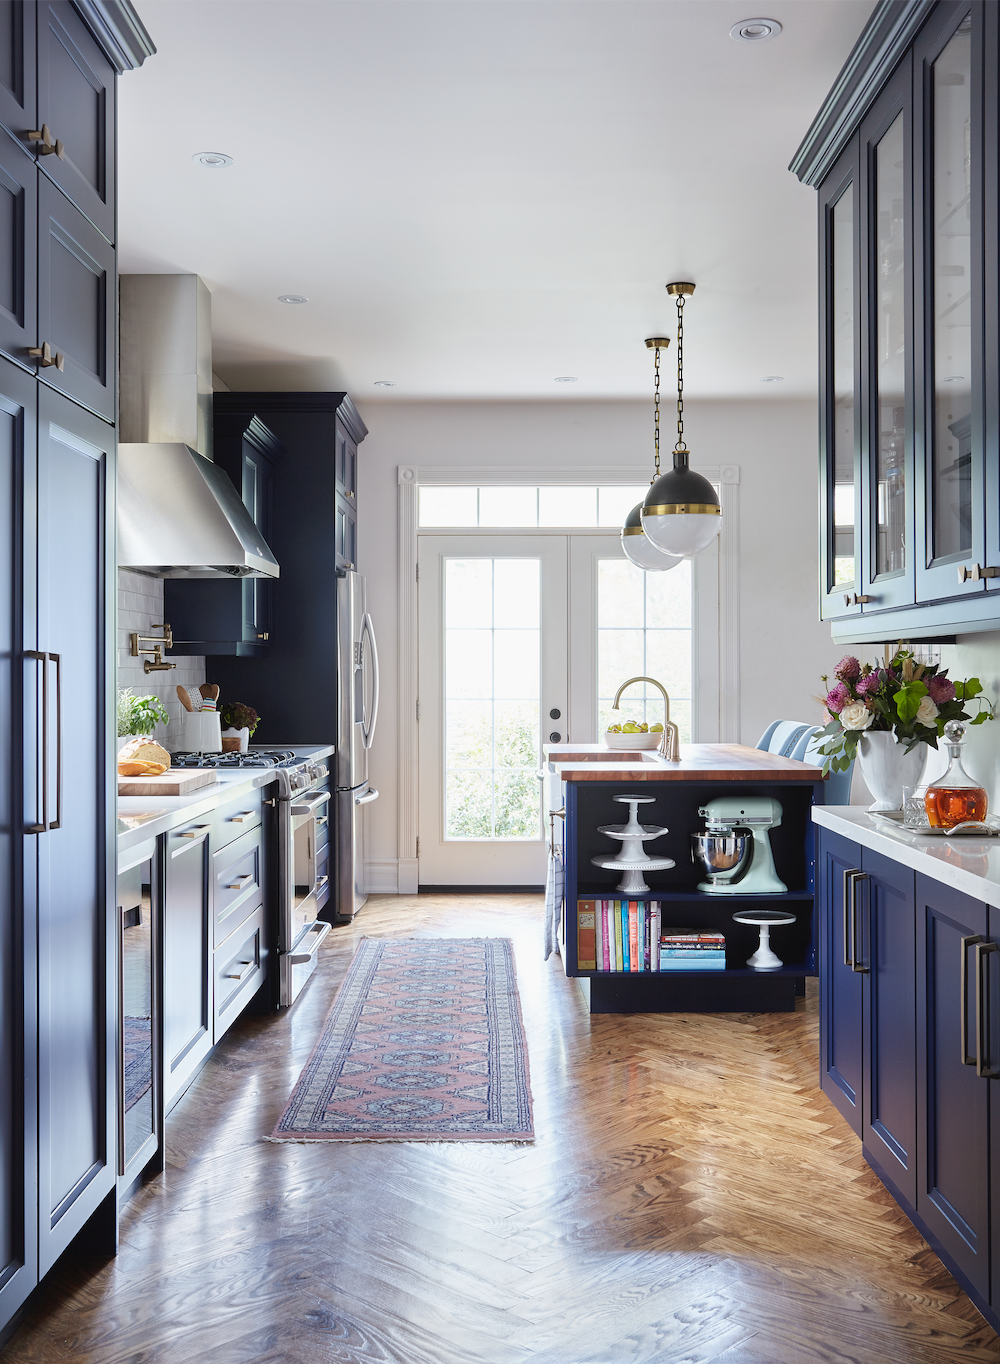 beautiful kitchen with herringbone wood floors, blue cabinets, and white walls